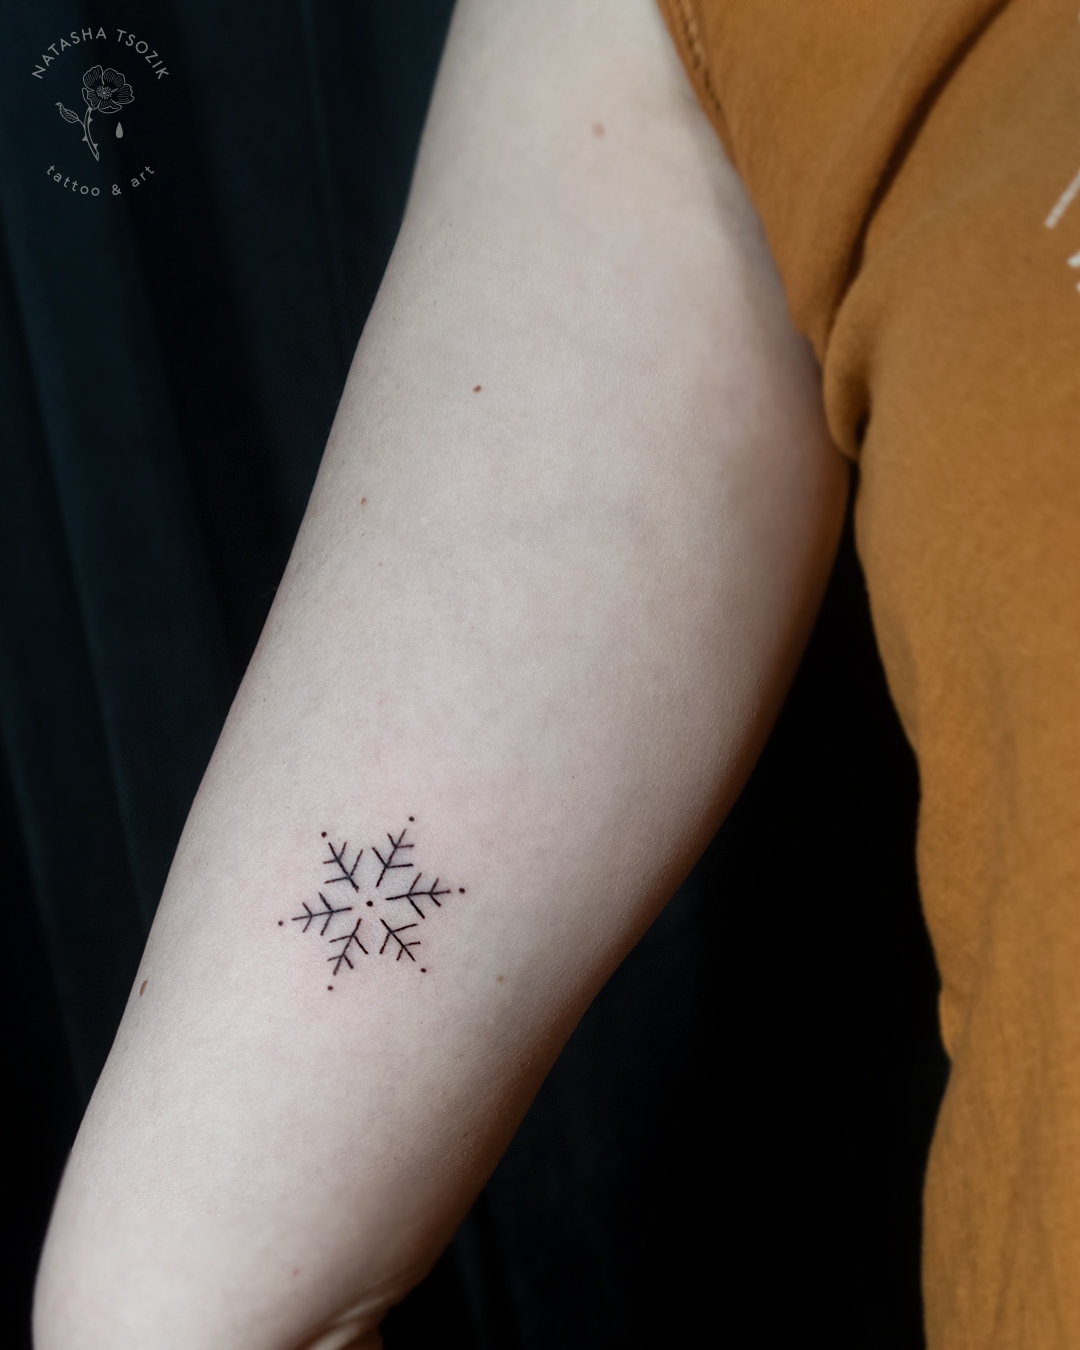 A minimalistic snowflake tattoo on an inner bicep.